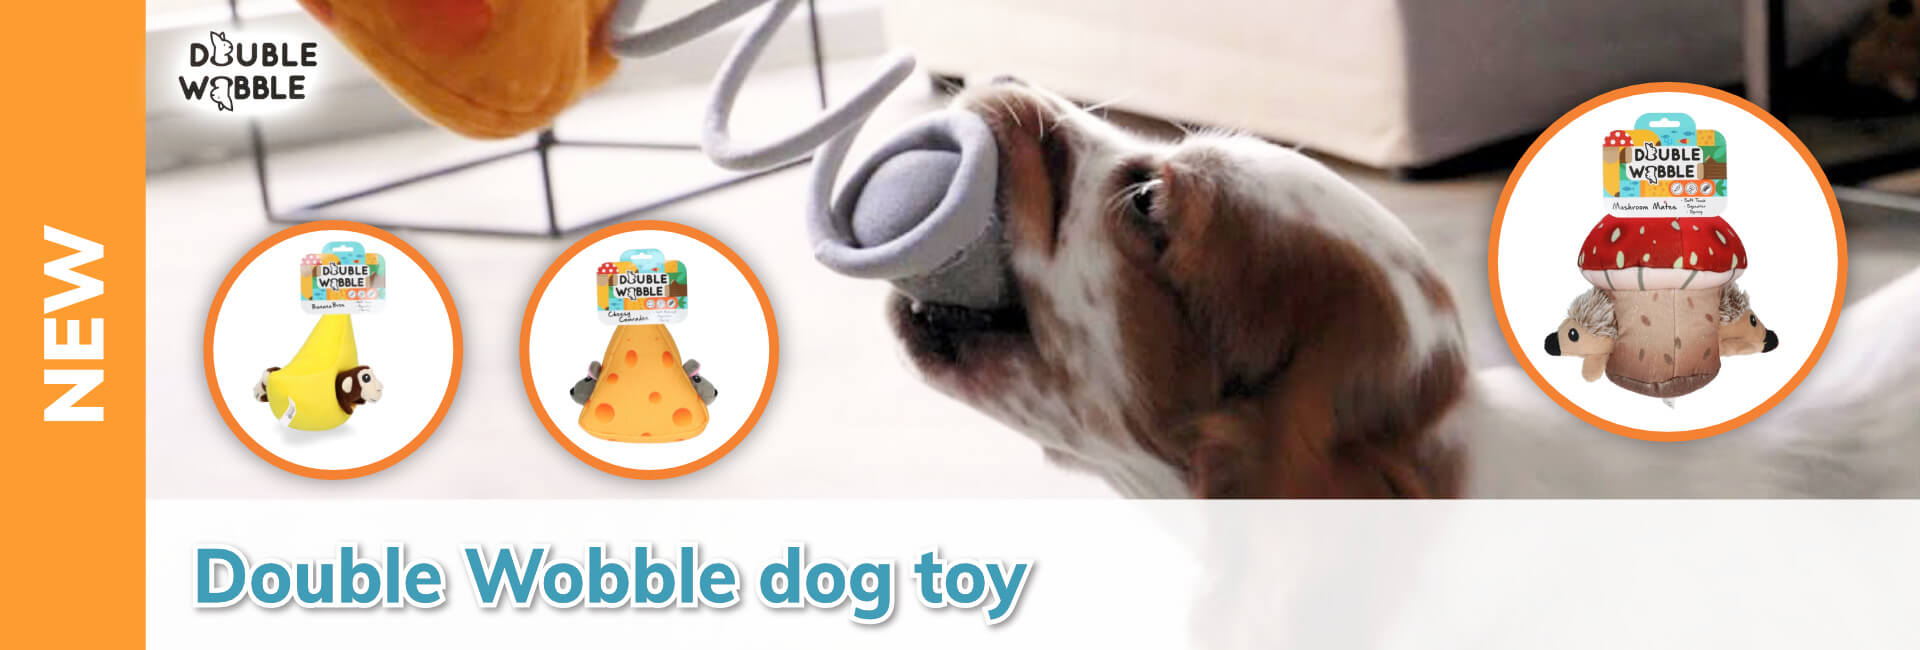 Double Wobble dog toy